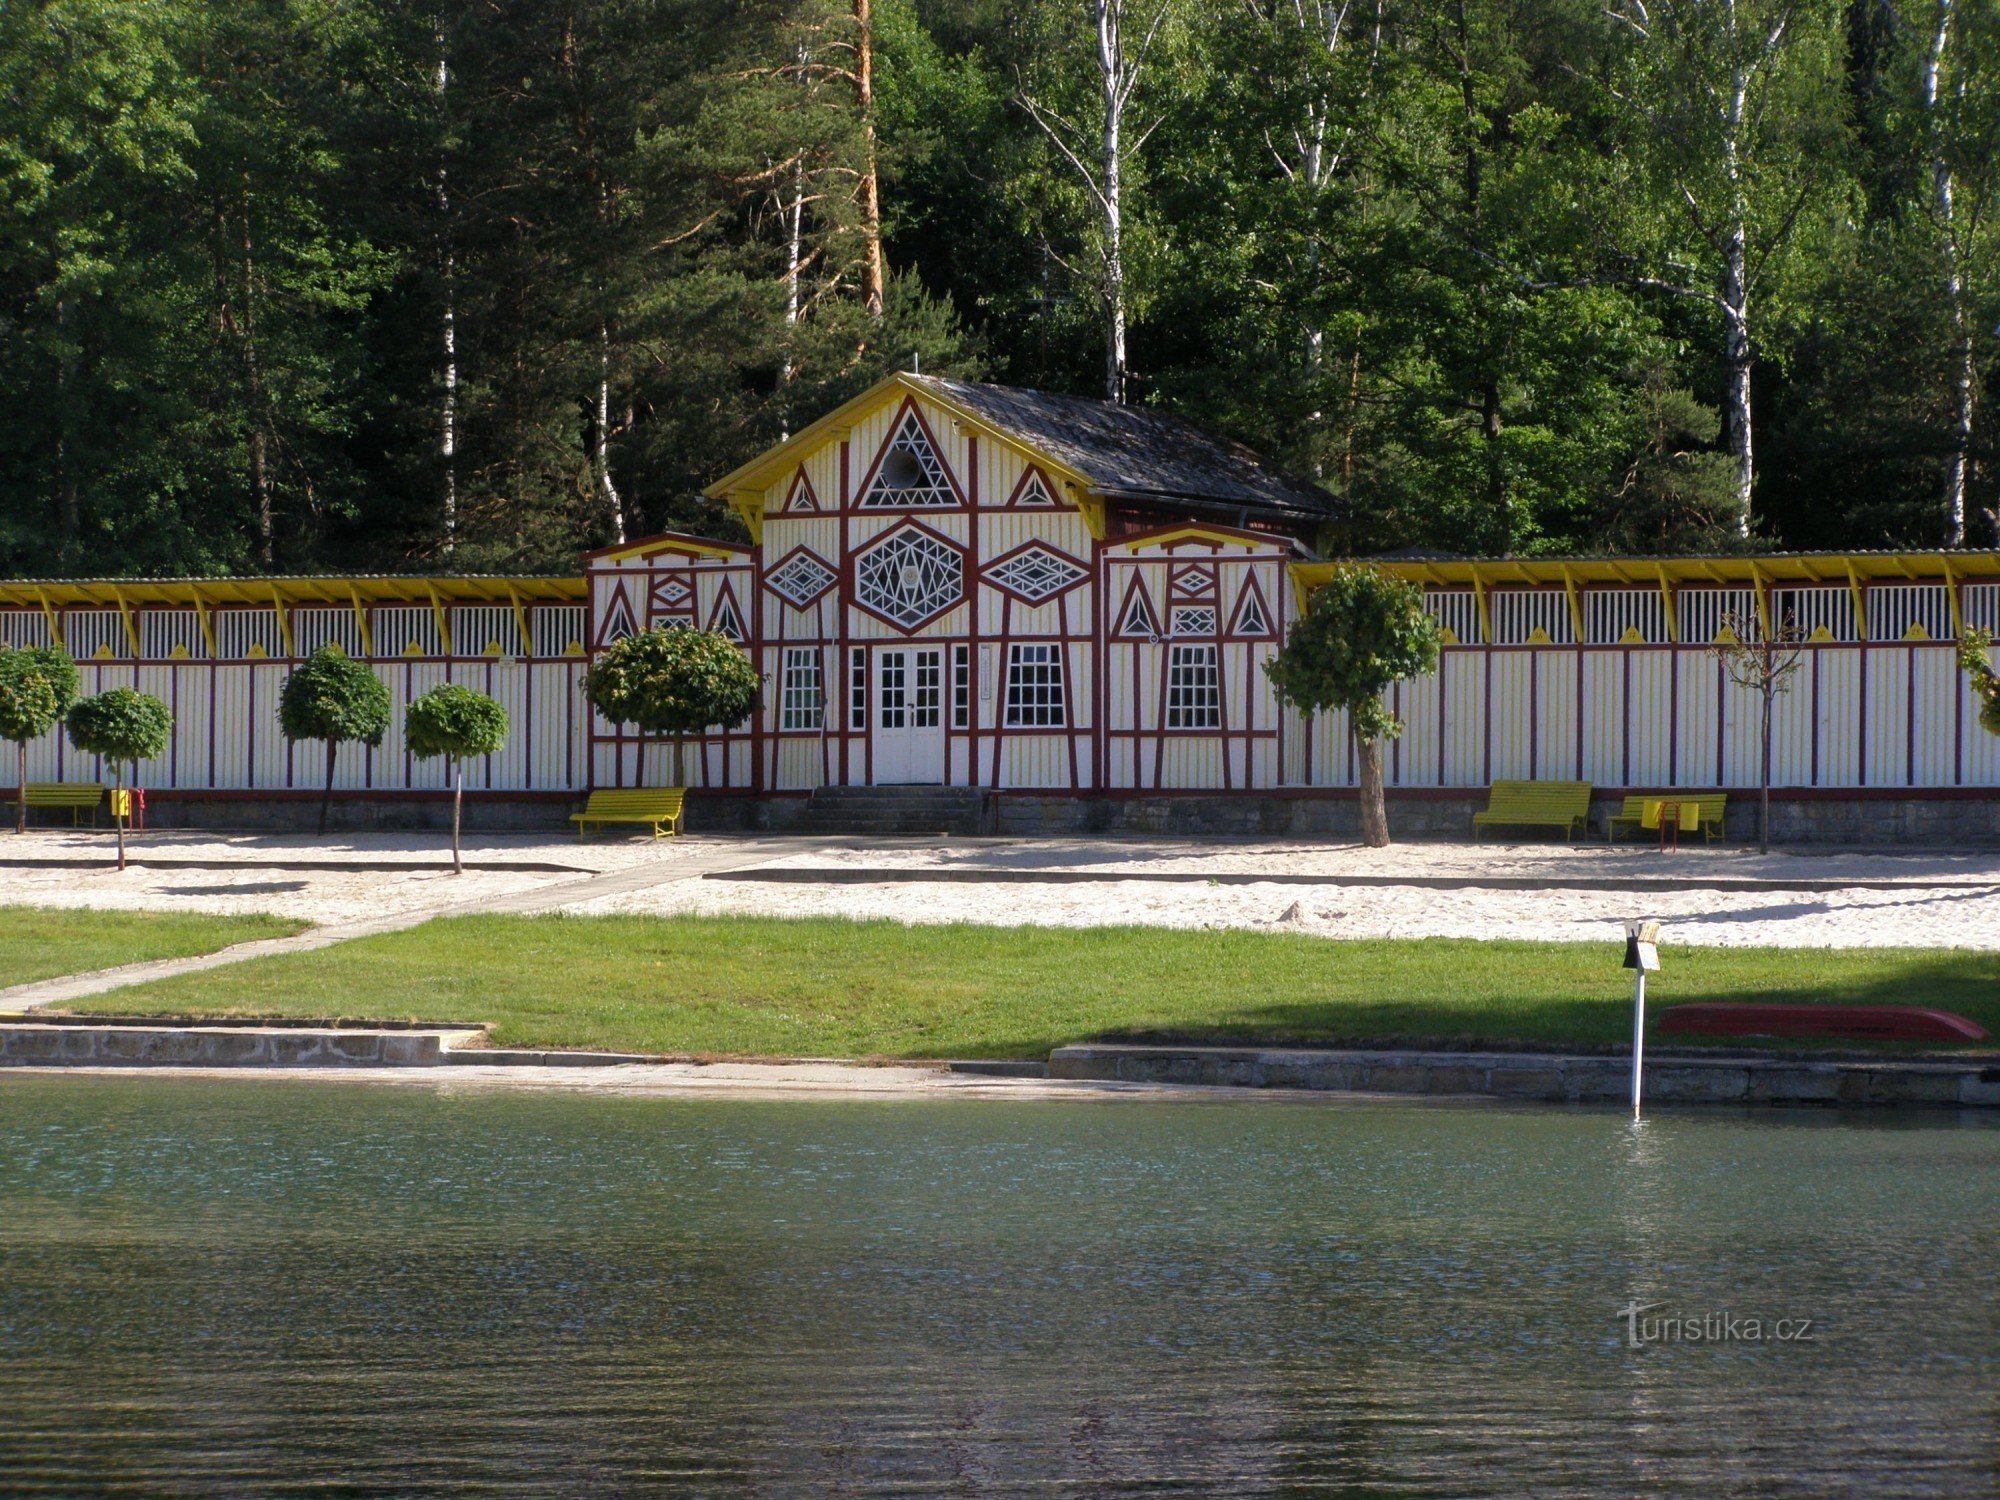 Hořice - Dachova swimming pool